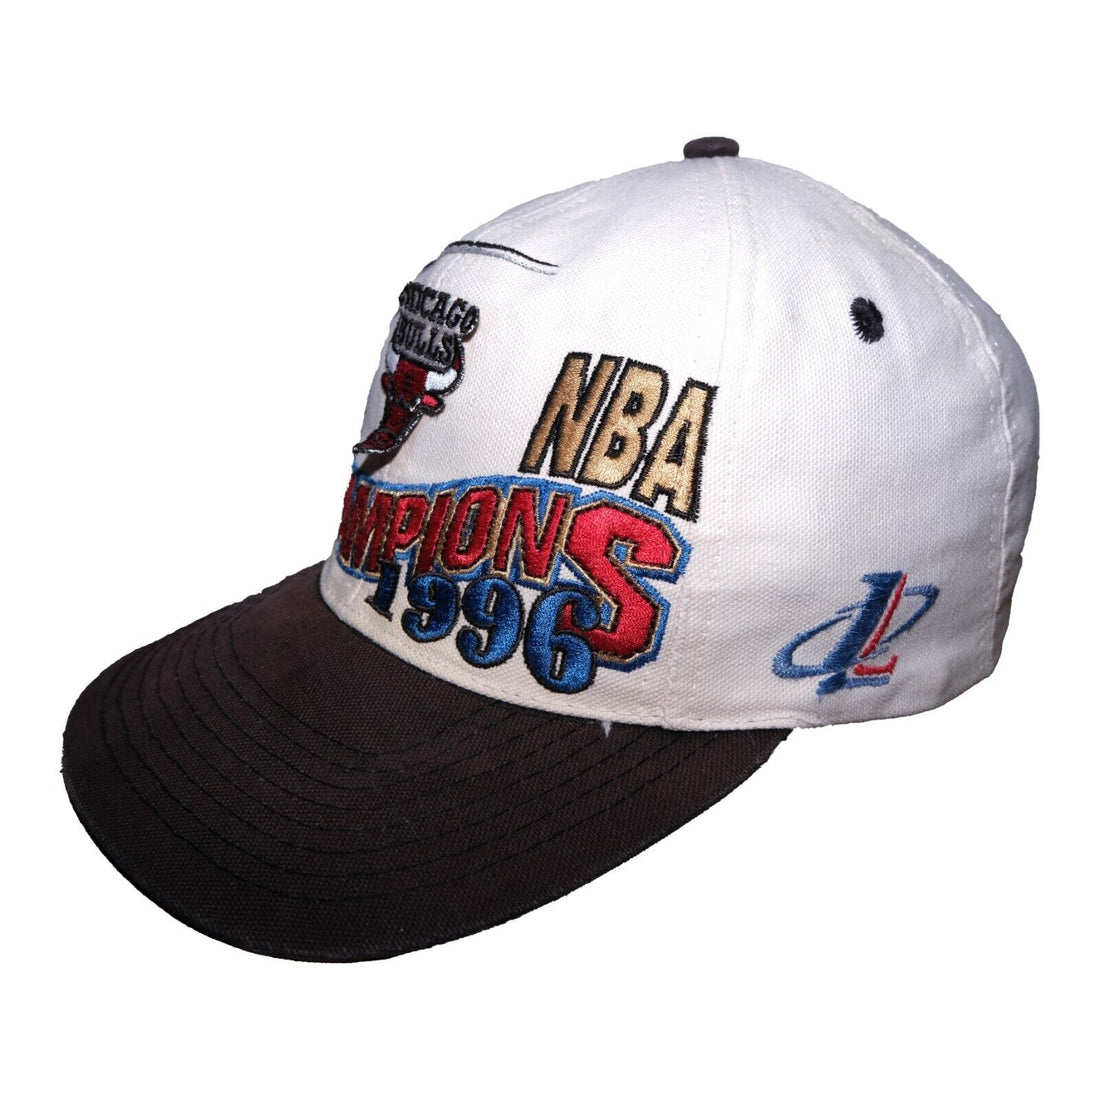 chicago bulls 1996 championship hat